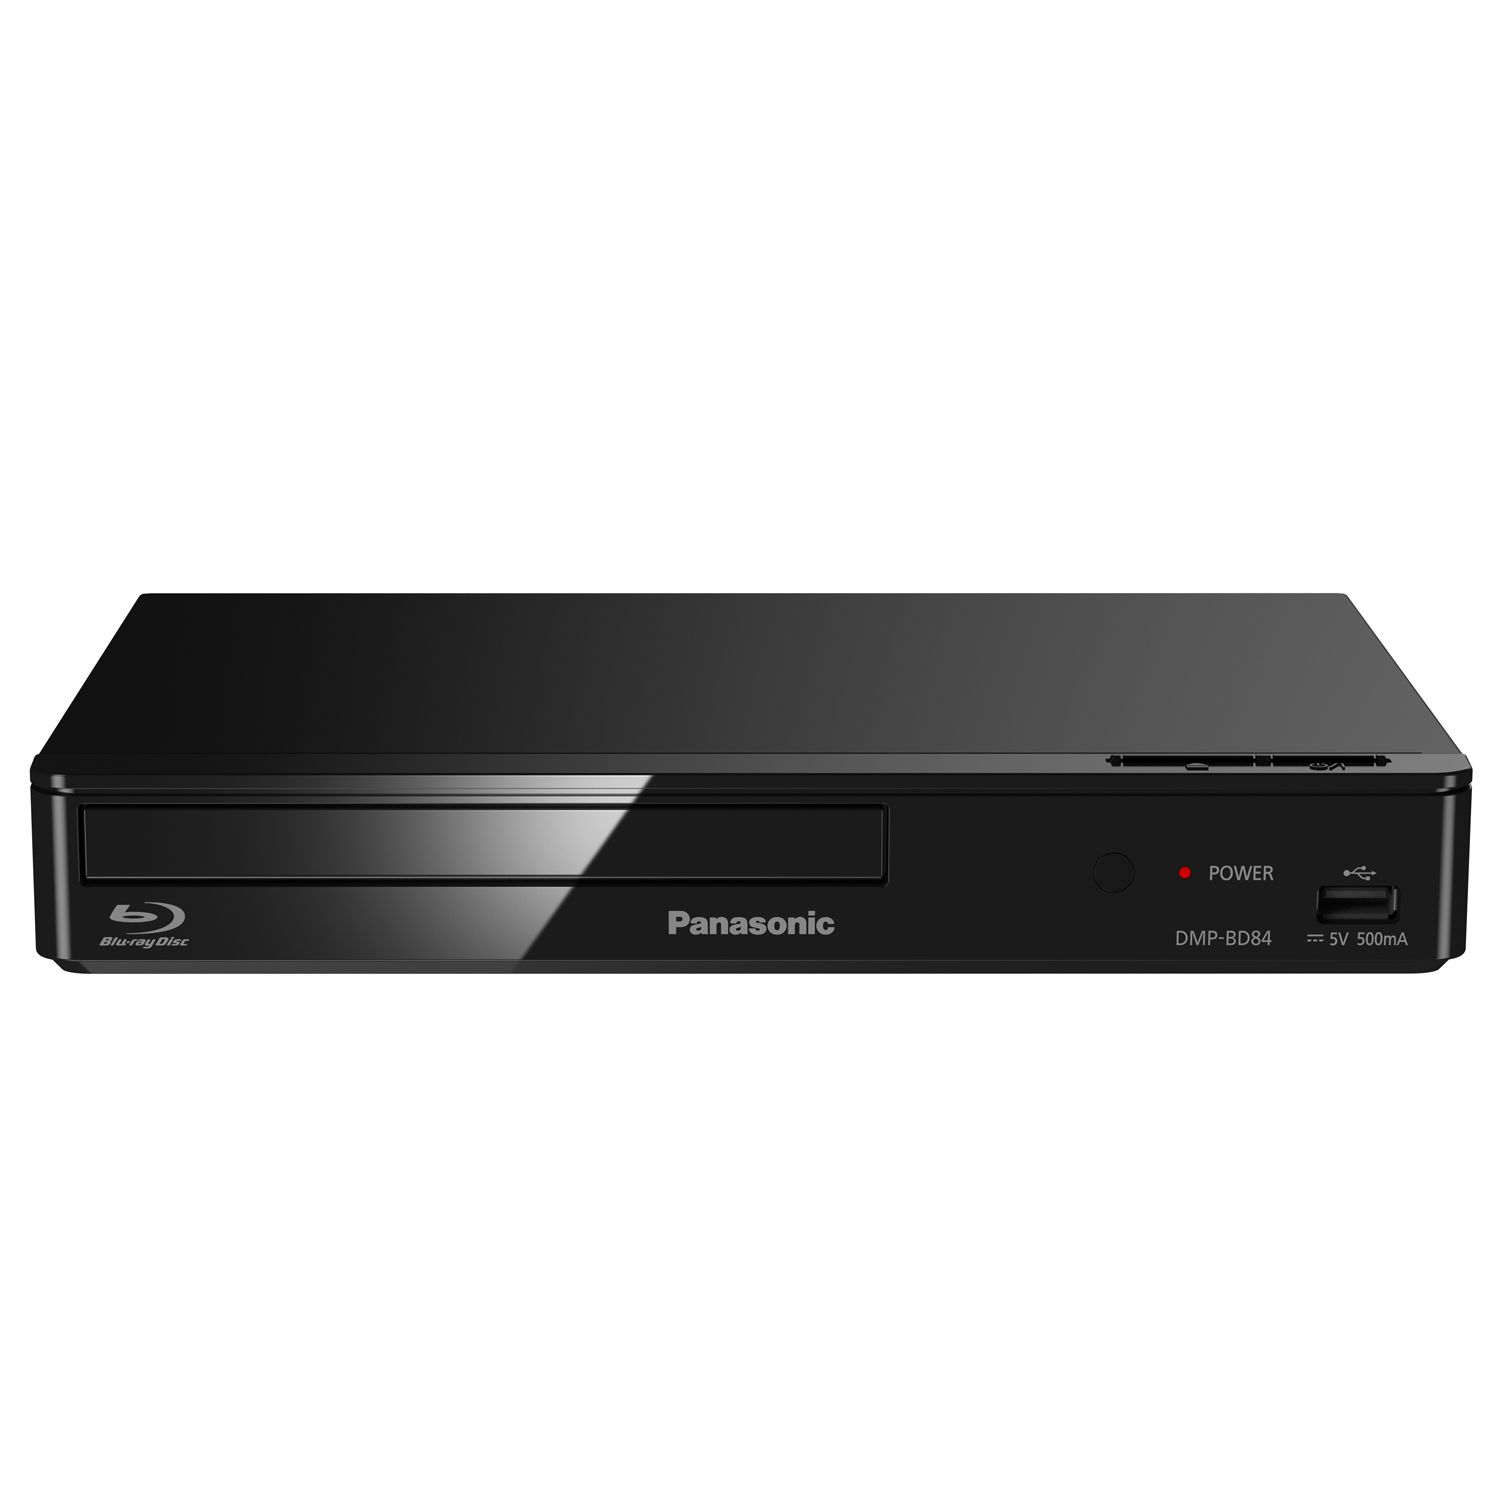 Panasonic dp-ub820 - Panasonic Bluray & dvd players for sale on Hi-Fi Di  Prinzio